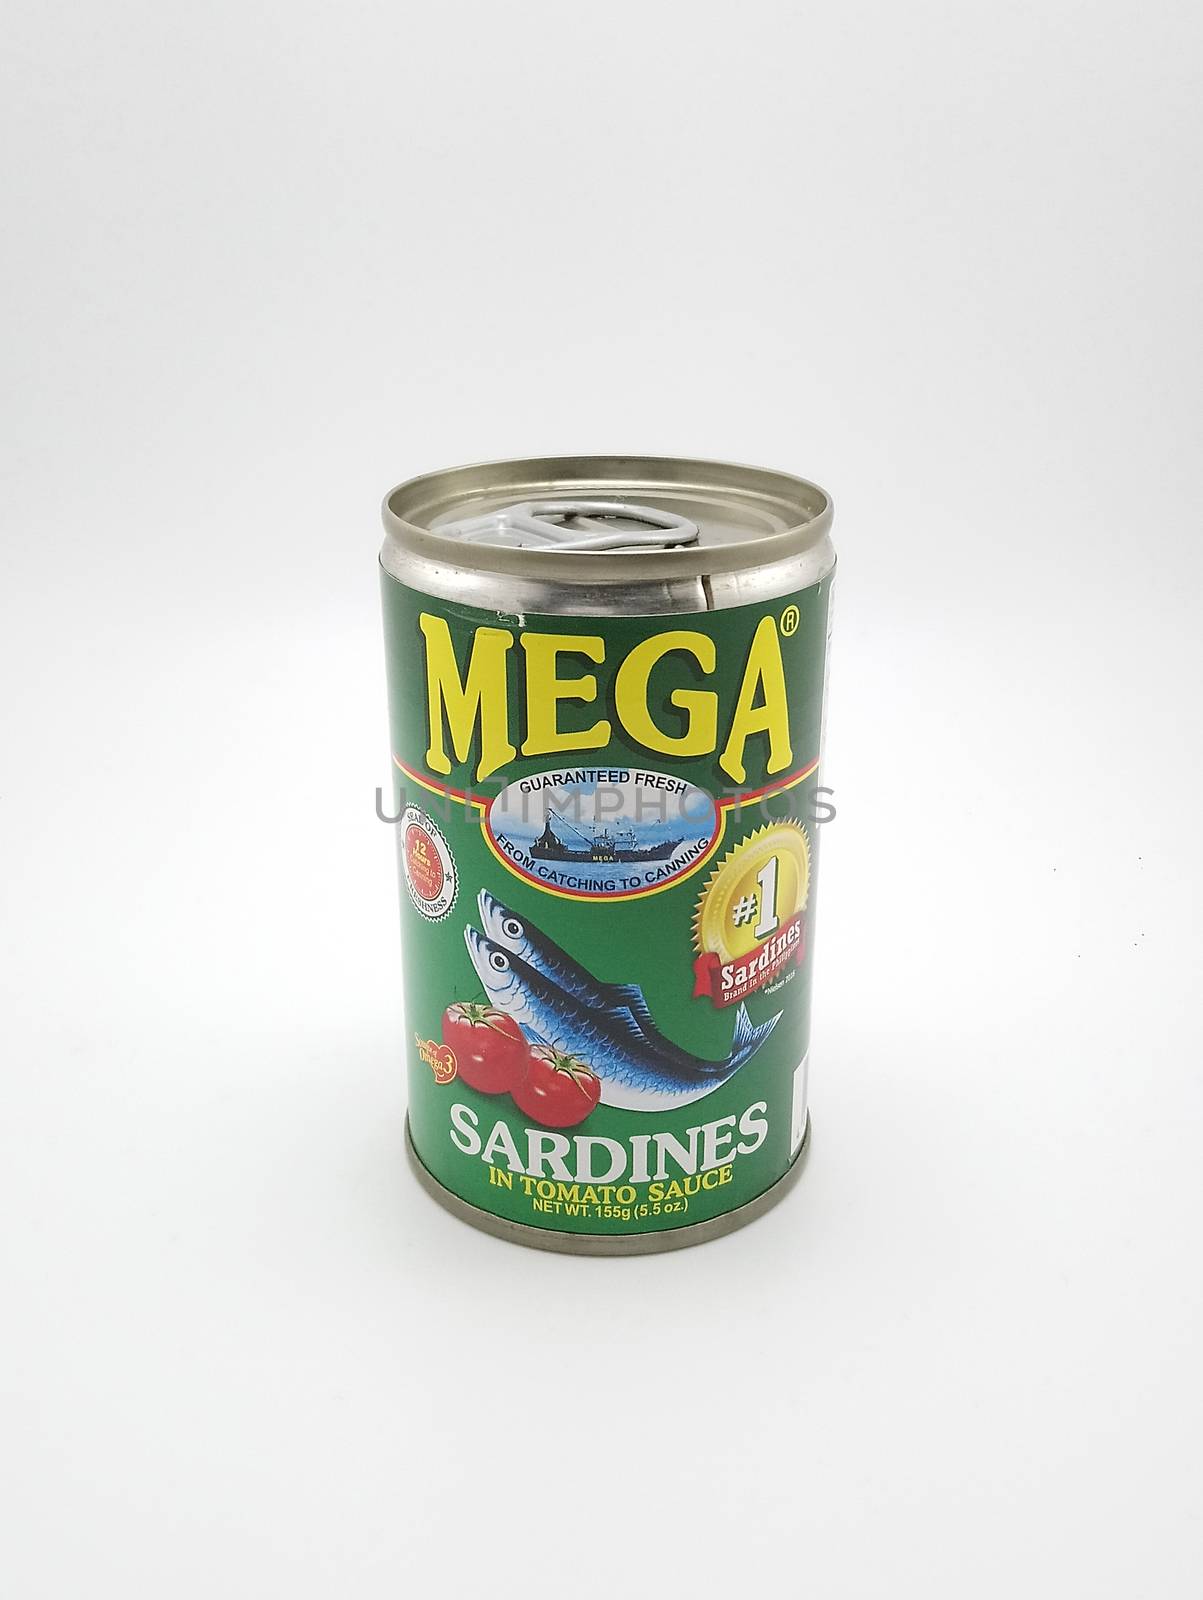 Mega sardines in tomato sauce in Manila, Philippines by imwaltersy